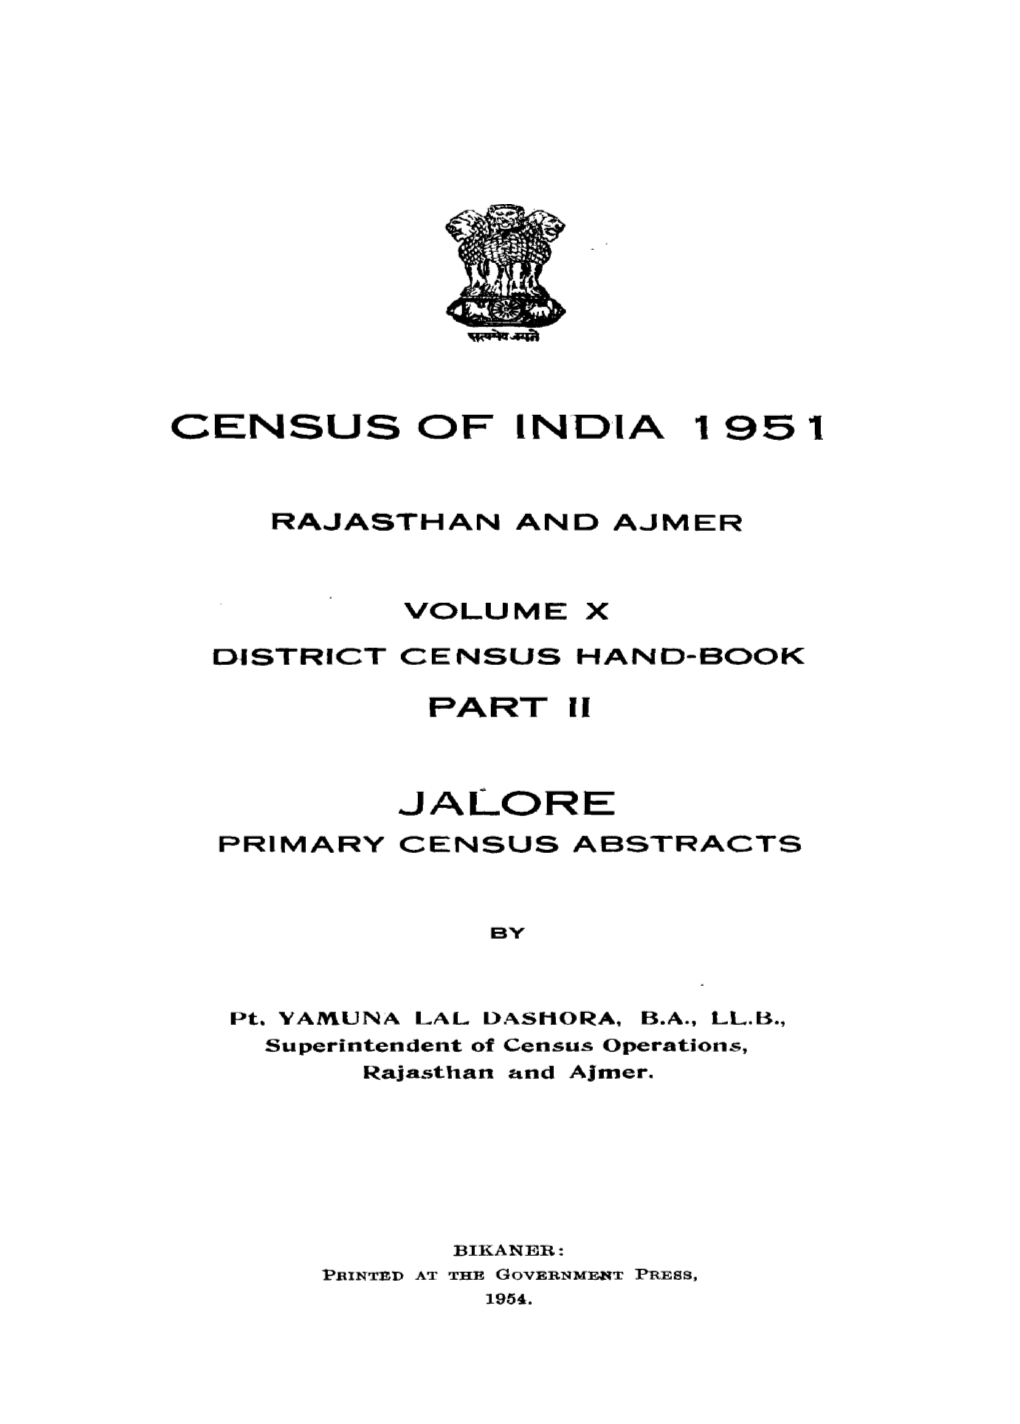 District Census Handbook, Jalore, Part II, Vol-X, Rajasthan and Ajmer